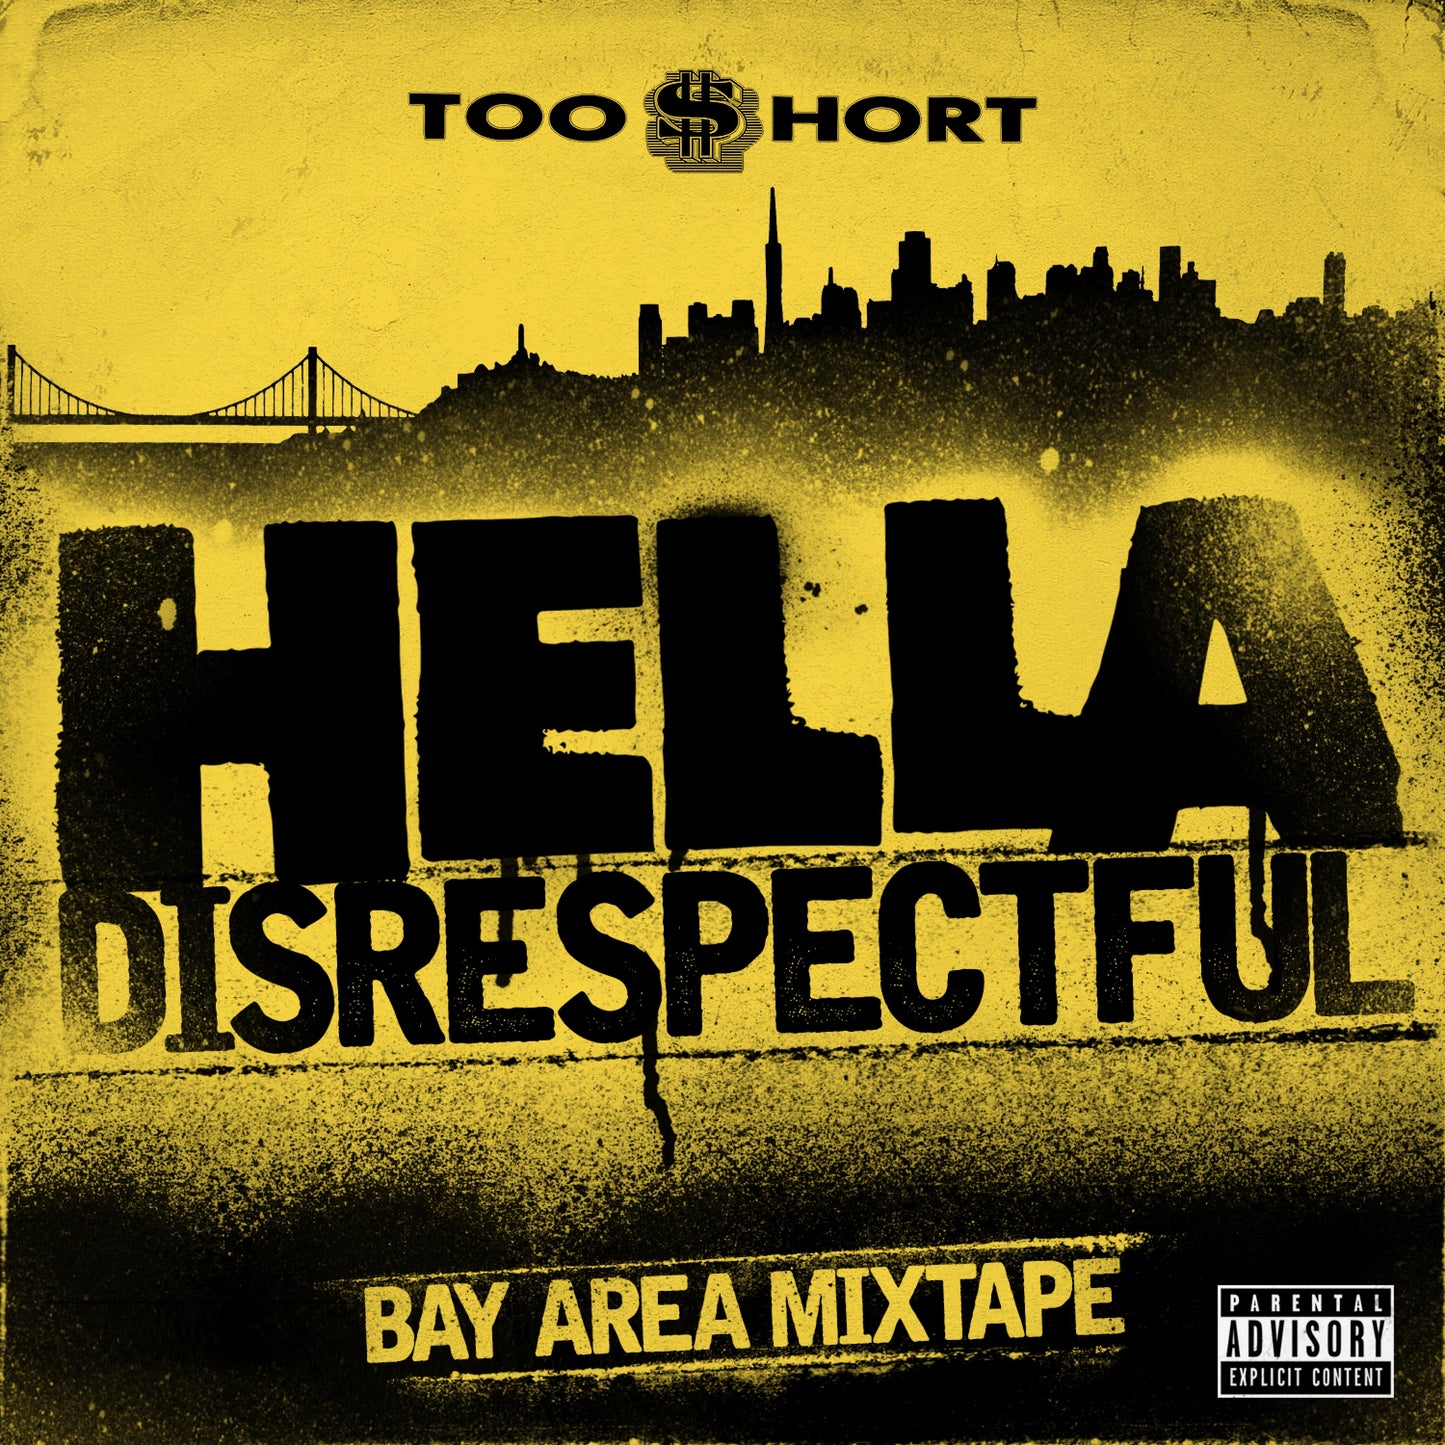 Too $hort - Bay Area Mixtape: Hella Disrespectful (CD)